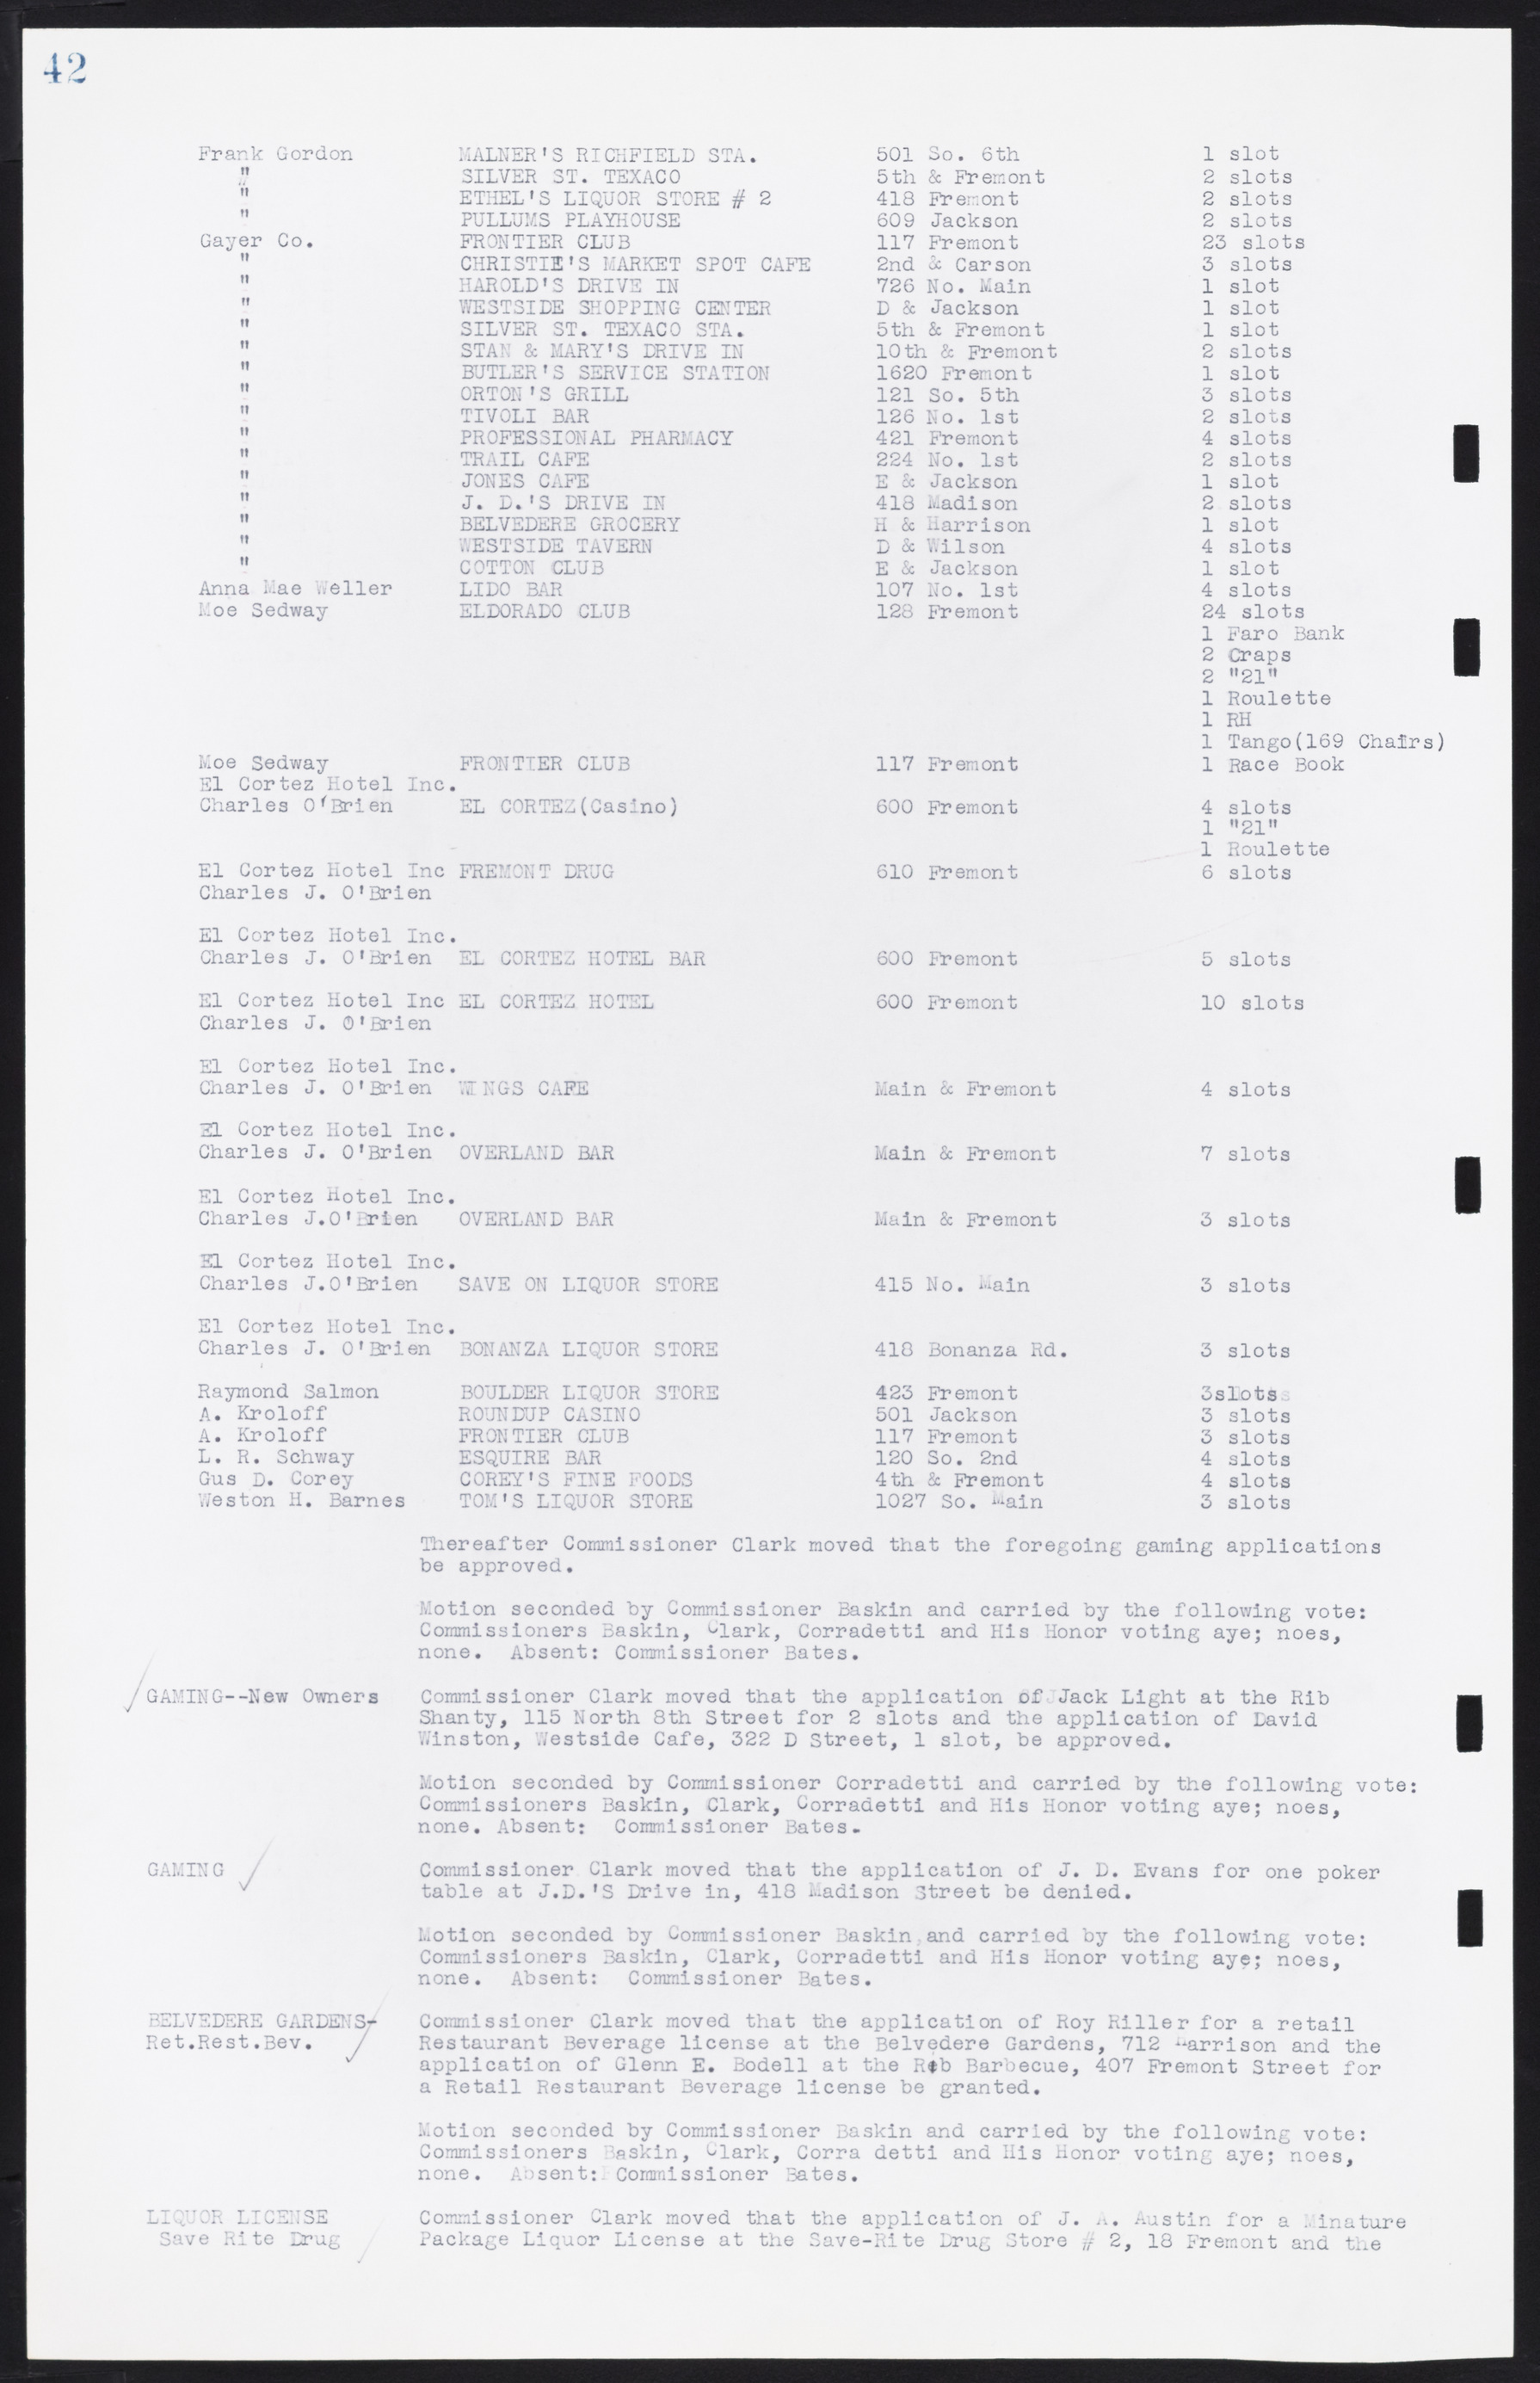 Las Vegas City Commission Minutes, January 7, 1947 to October 26, 1949, lvc000006-57